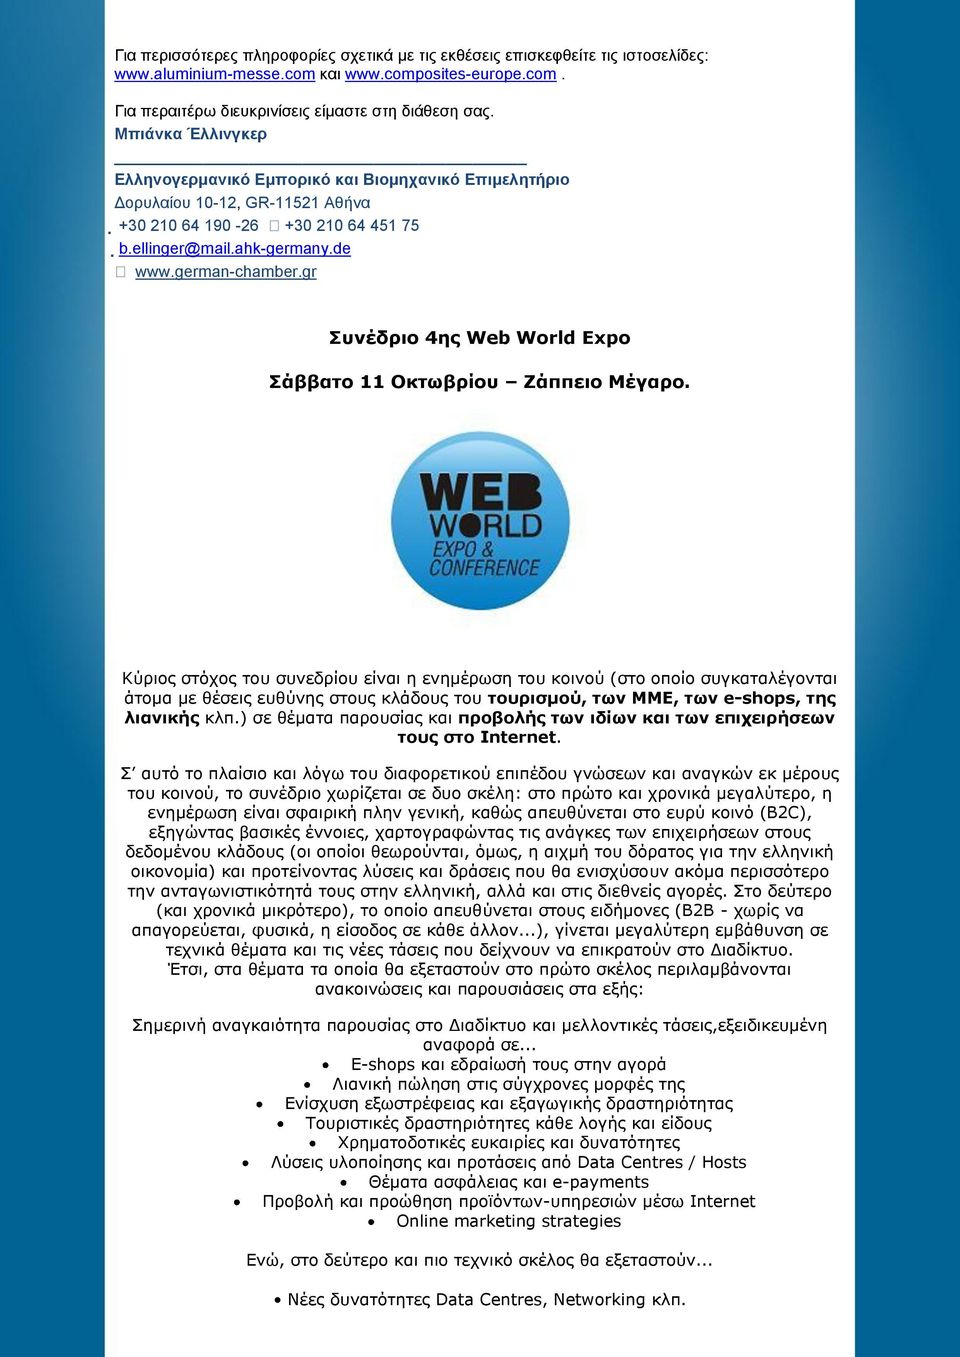 gr σνέδριο 4ης Web World Expo άββαηο 11 Οκηωβρίοσ Ζάππειο Λέγαρο.